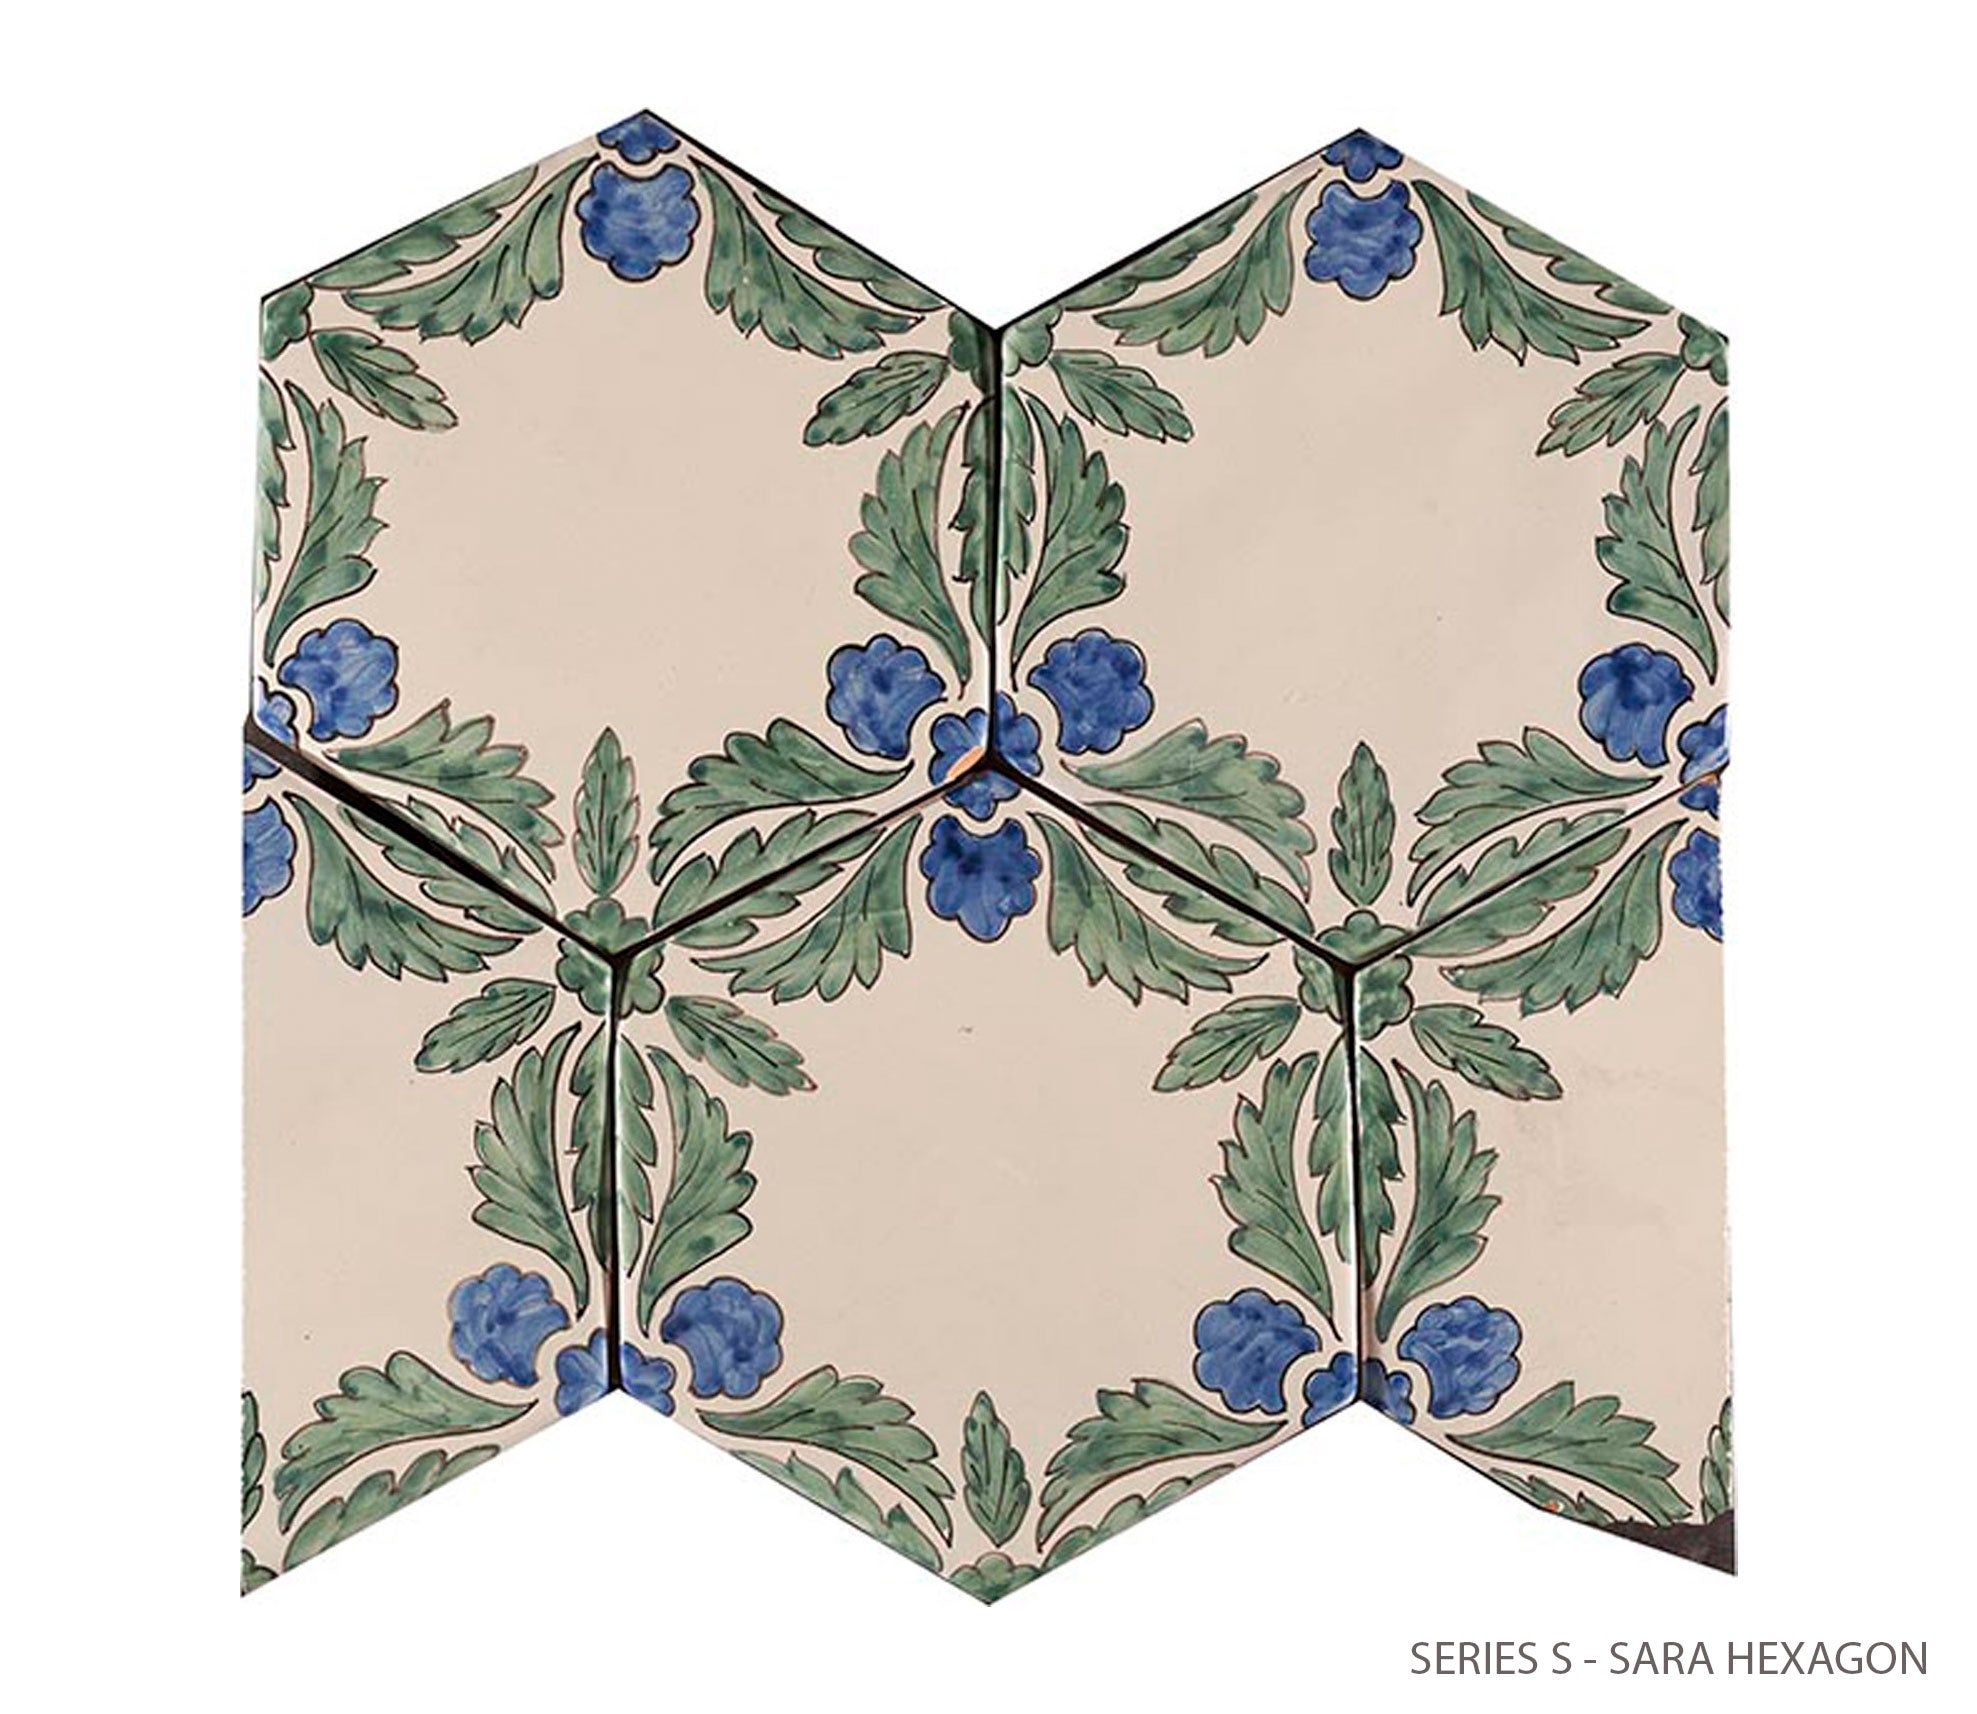 Series S Italian Handpainted Tiles Product Image 15